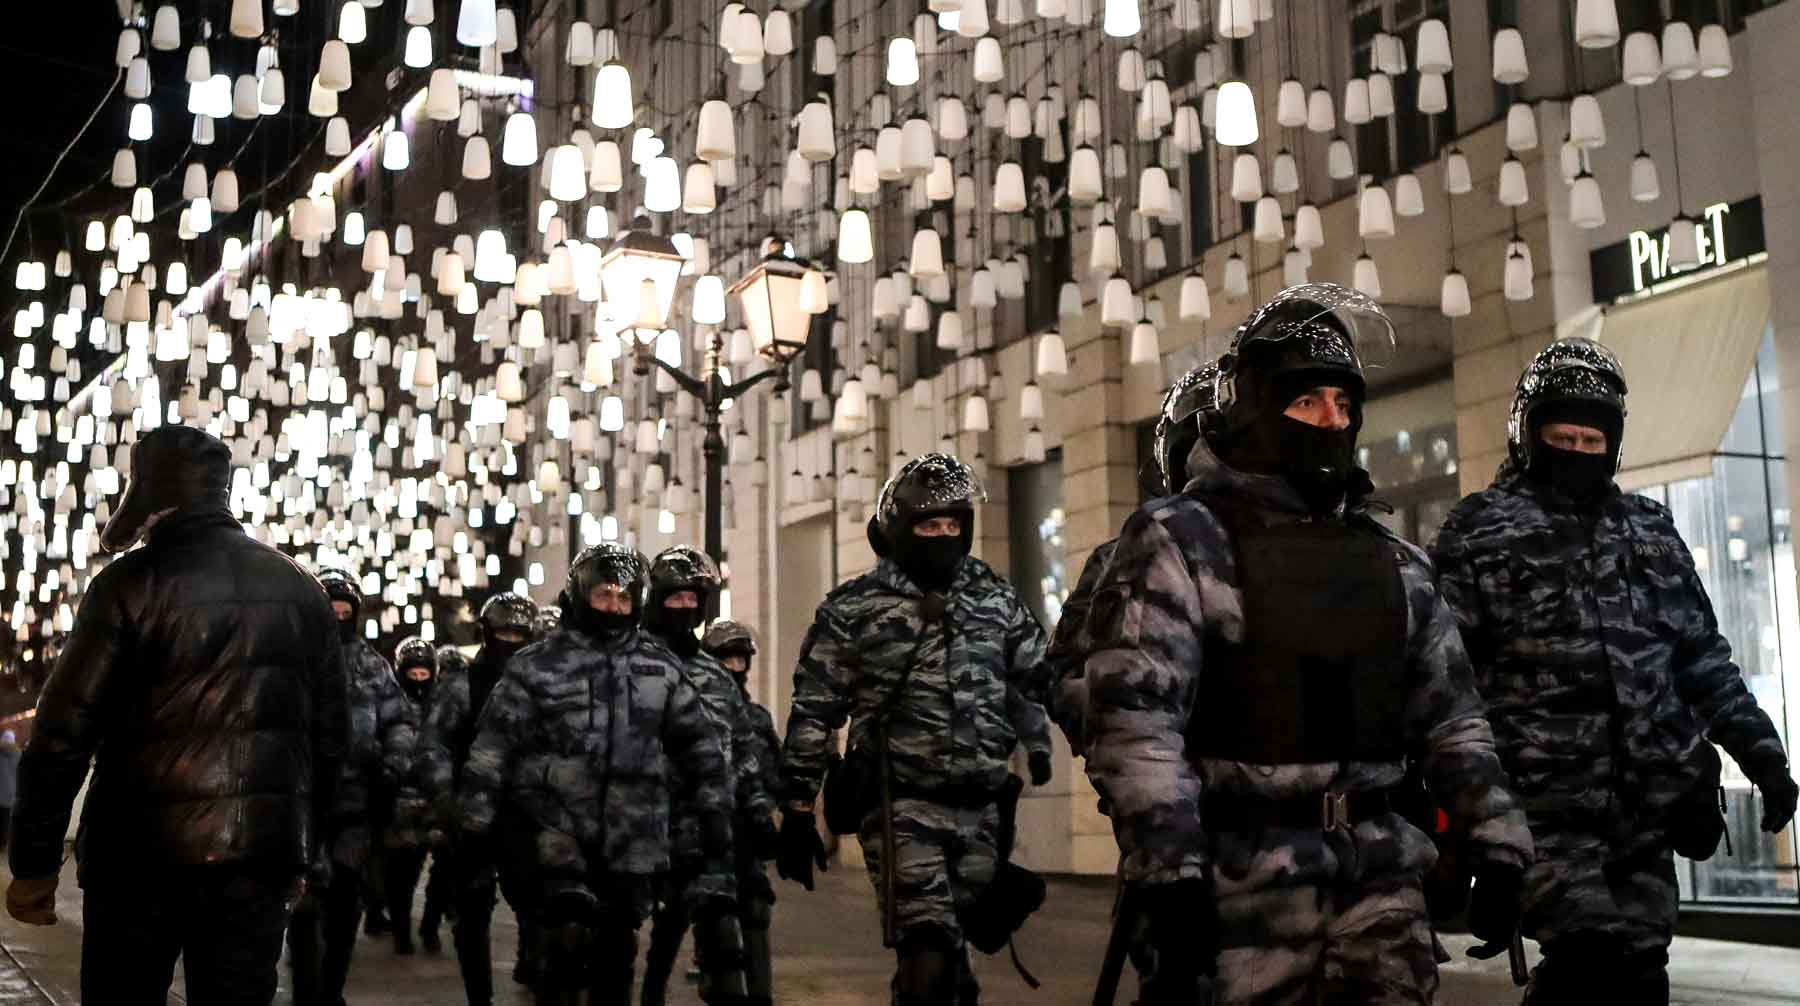 ОМОН Москва. ОМОН форма на митингах. Одежда ОМОНА на митингах.